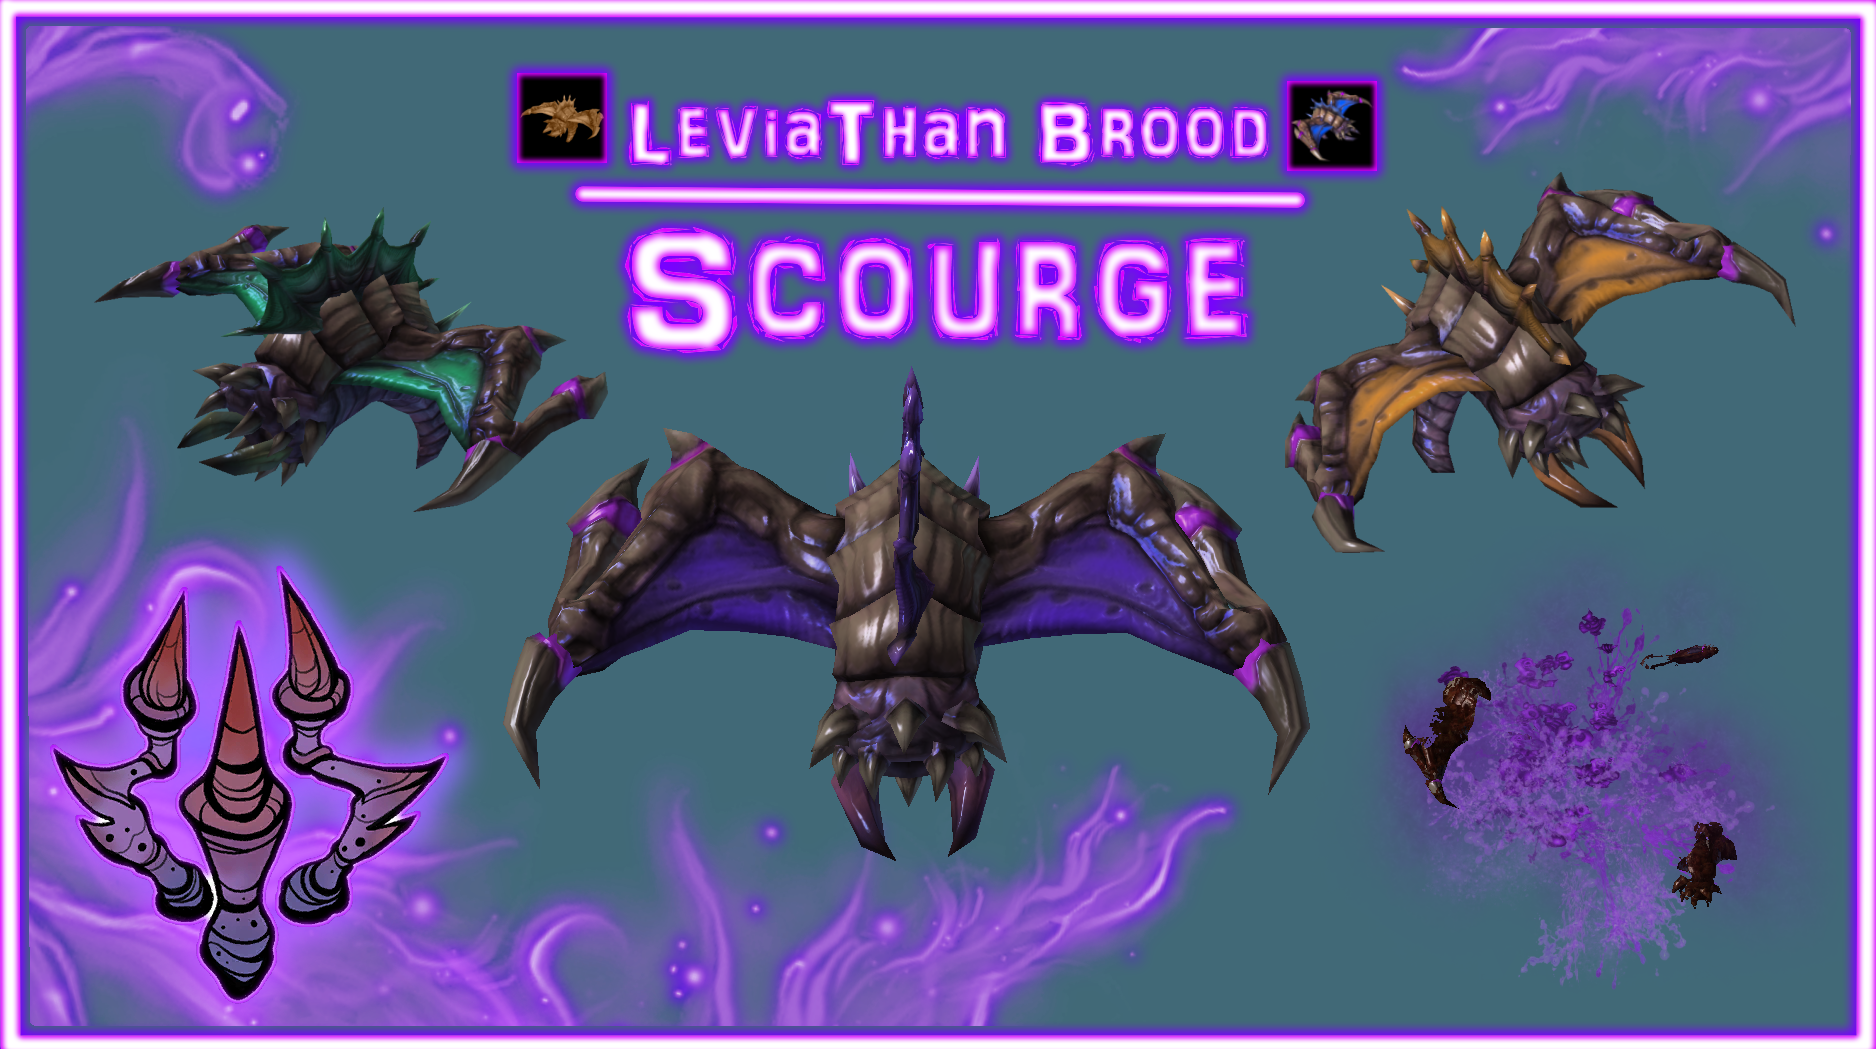 Leviathan Brood Scourge